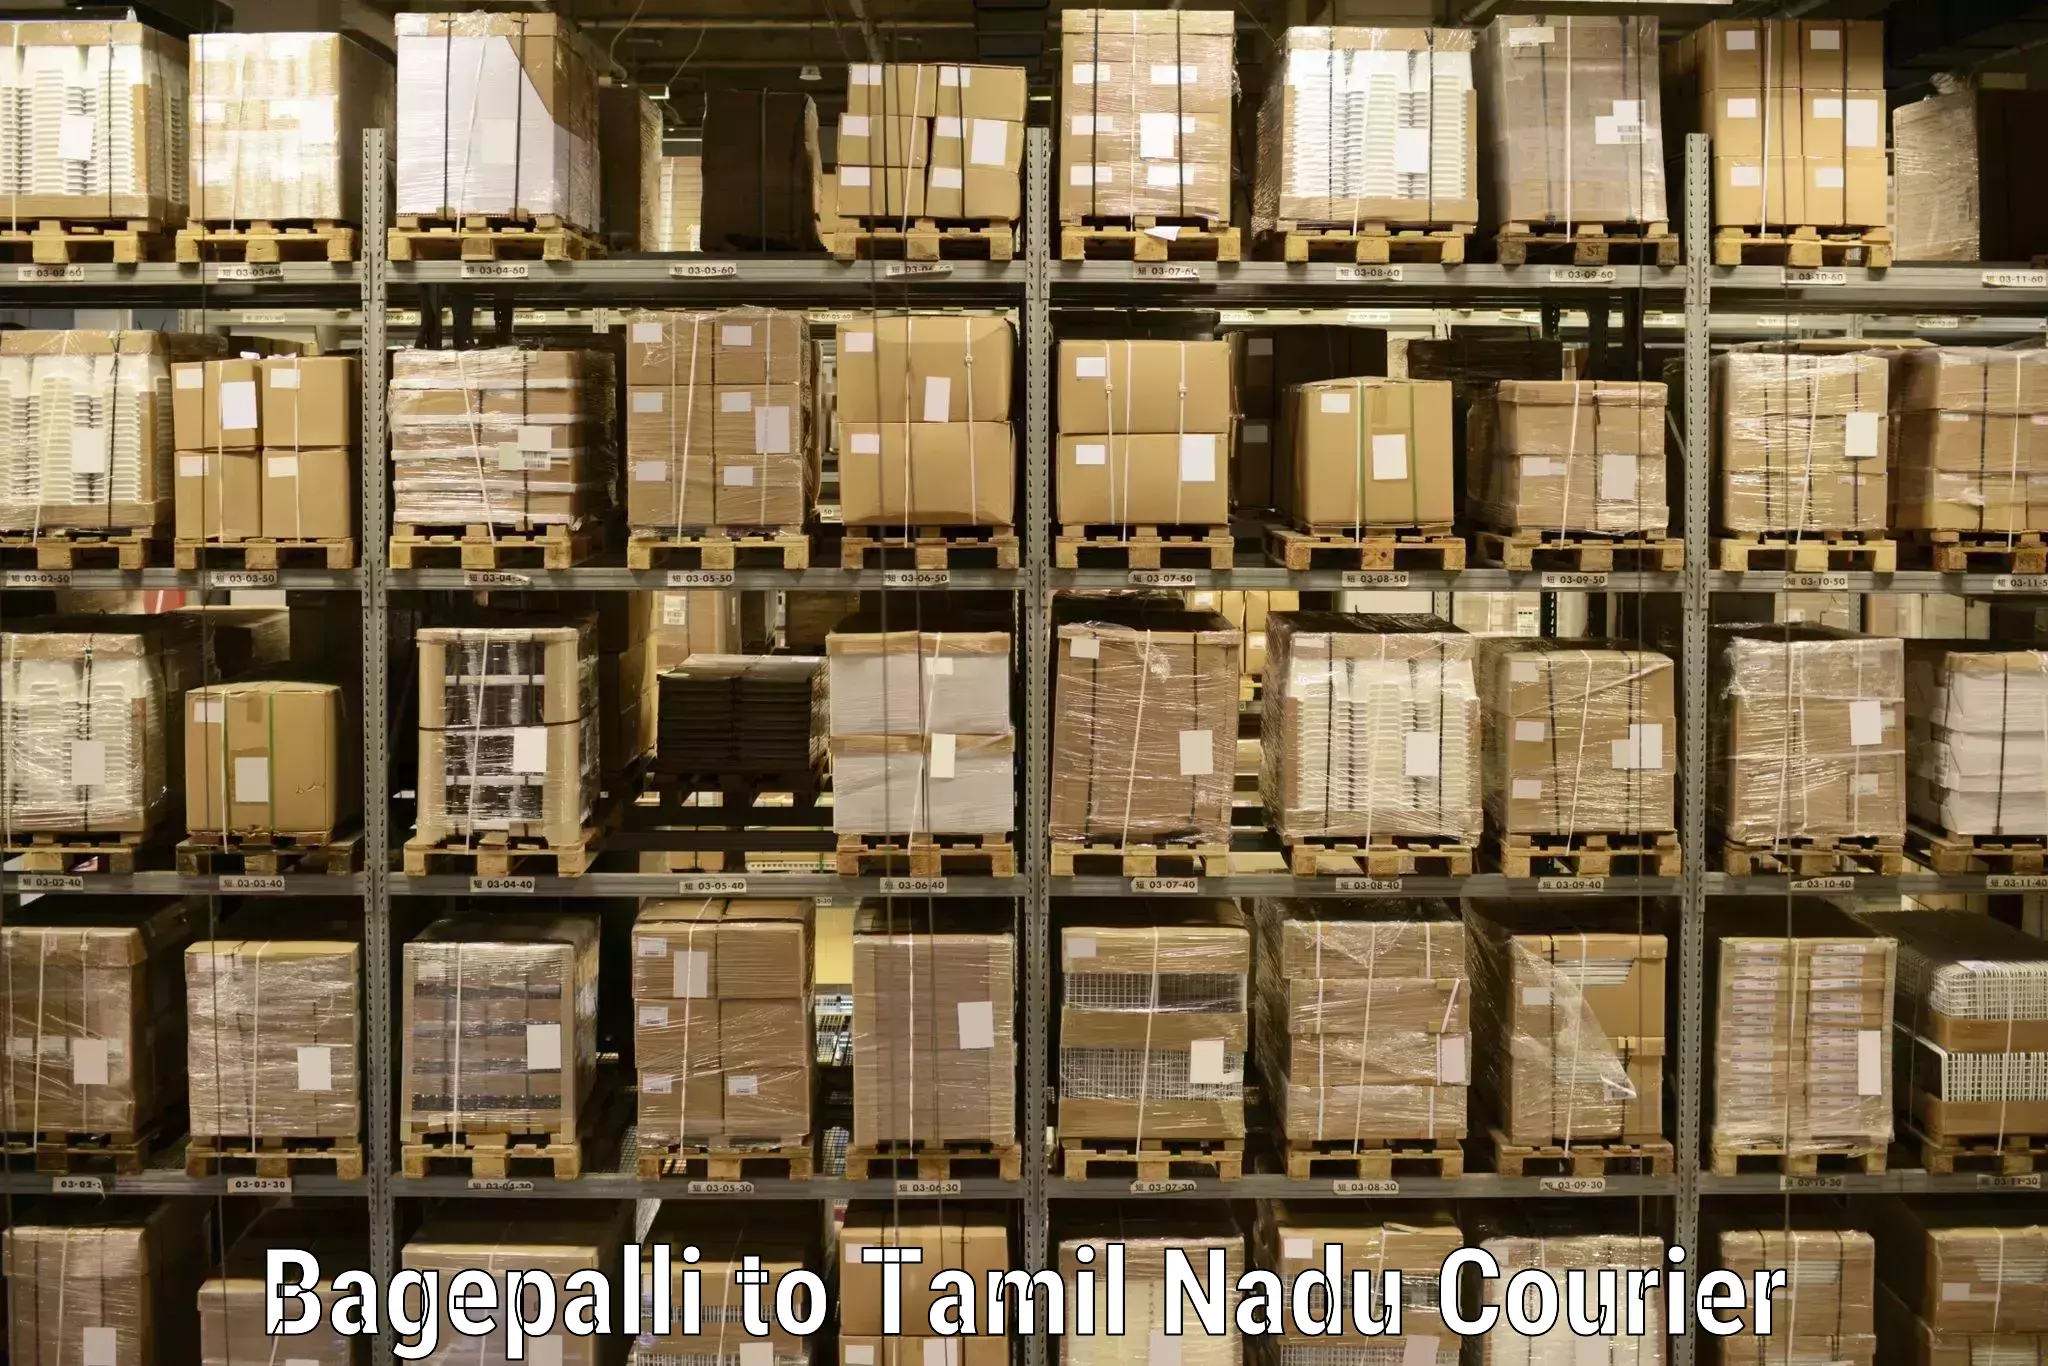 Global courier networks Bagepalli to Perambur